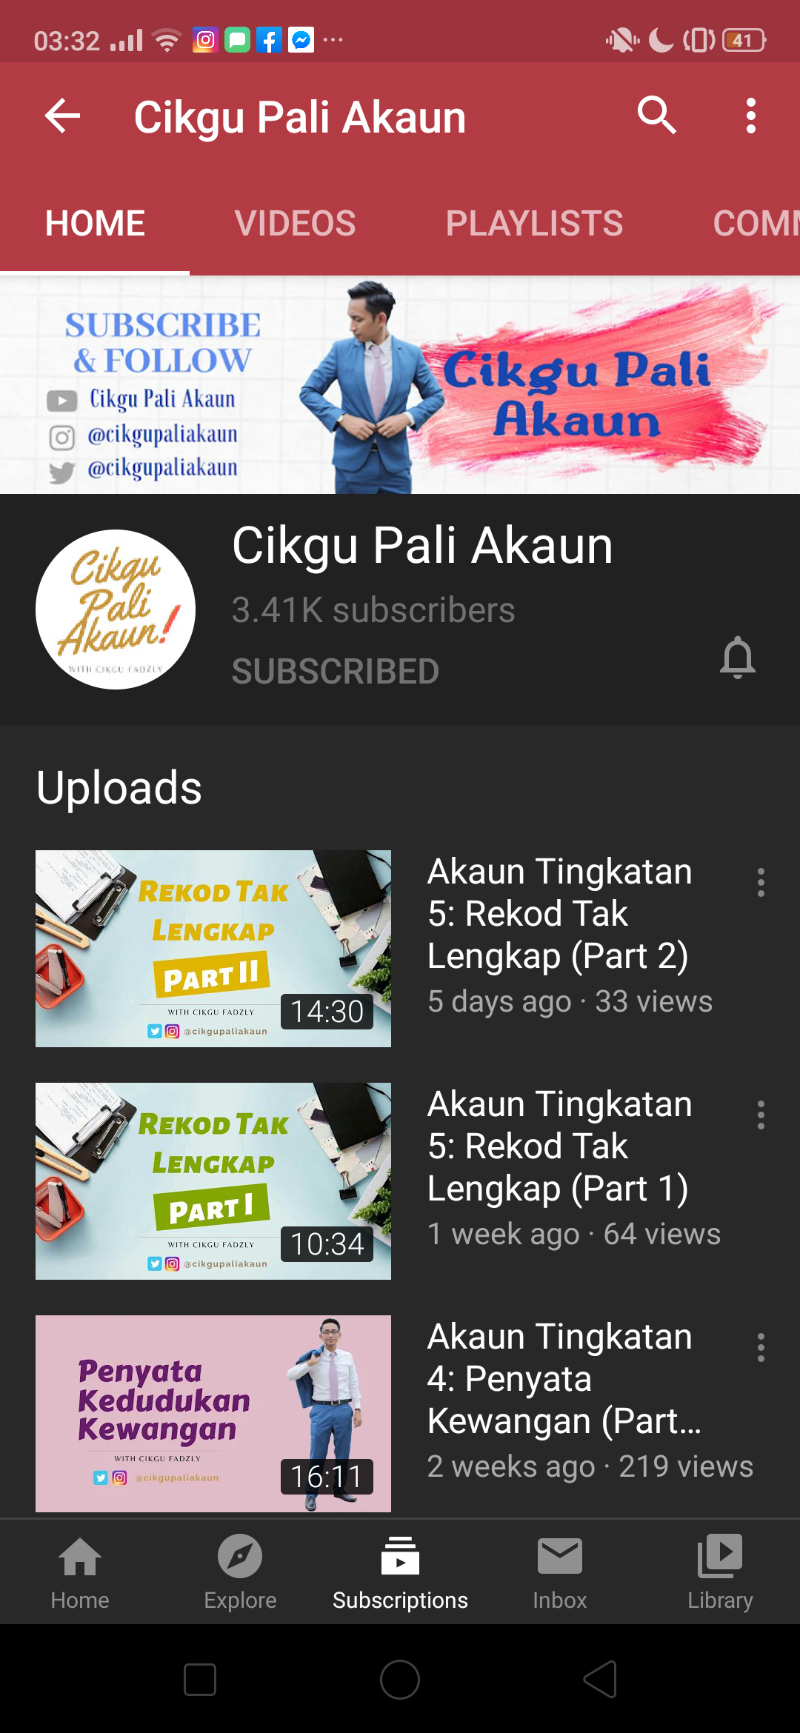 Cikgu Pali Akaun频道主页。